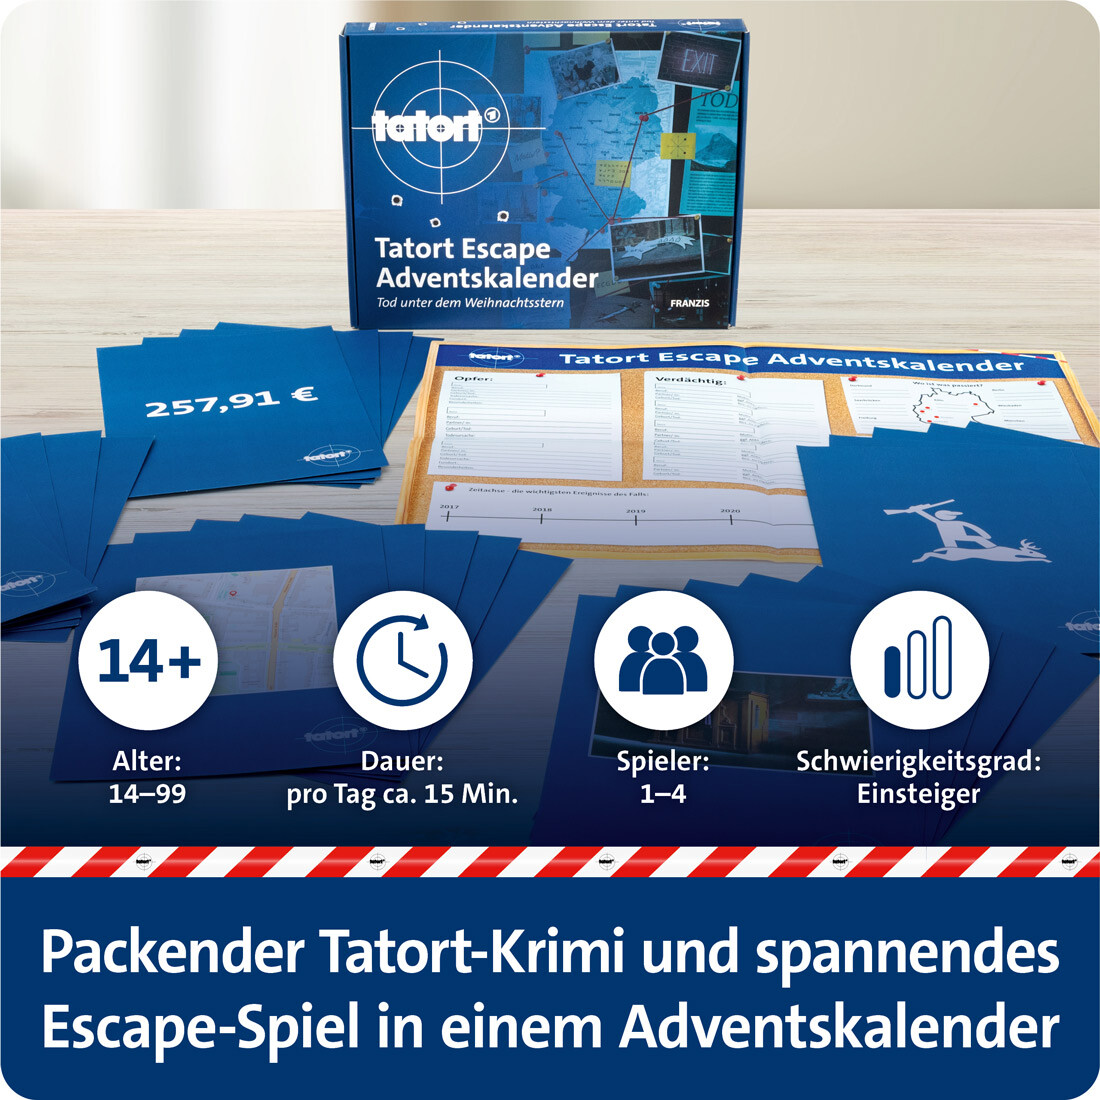 Tatort-Escape-Adventskalender